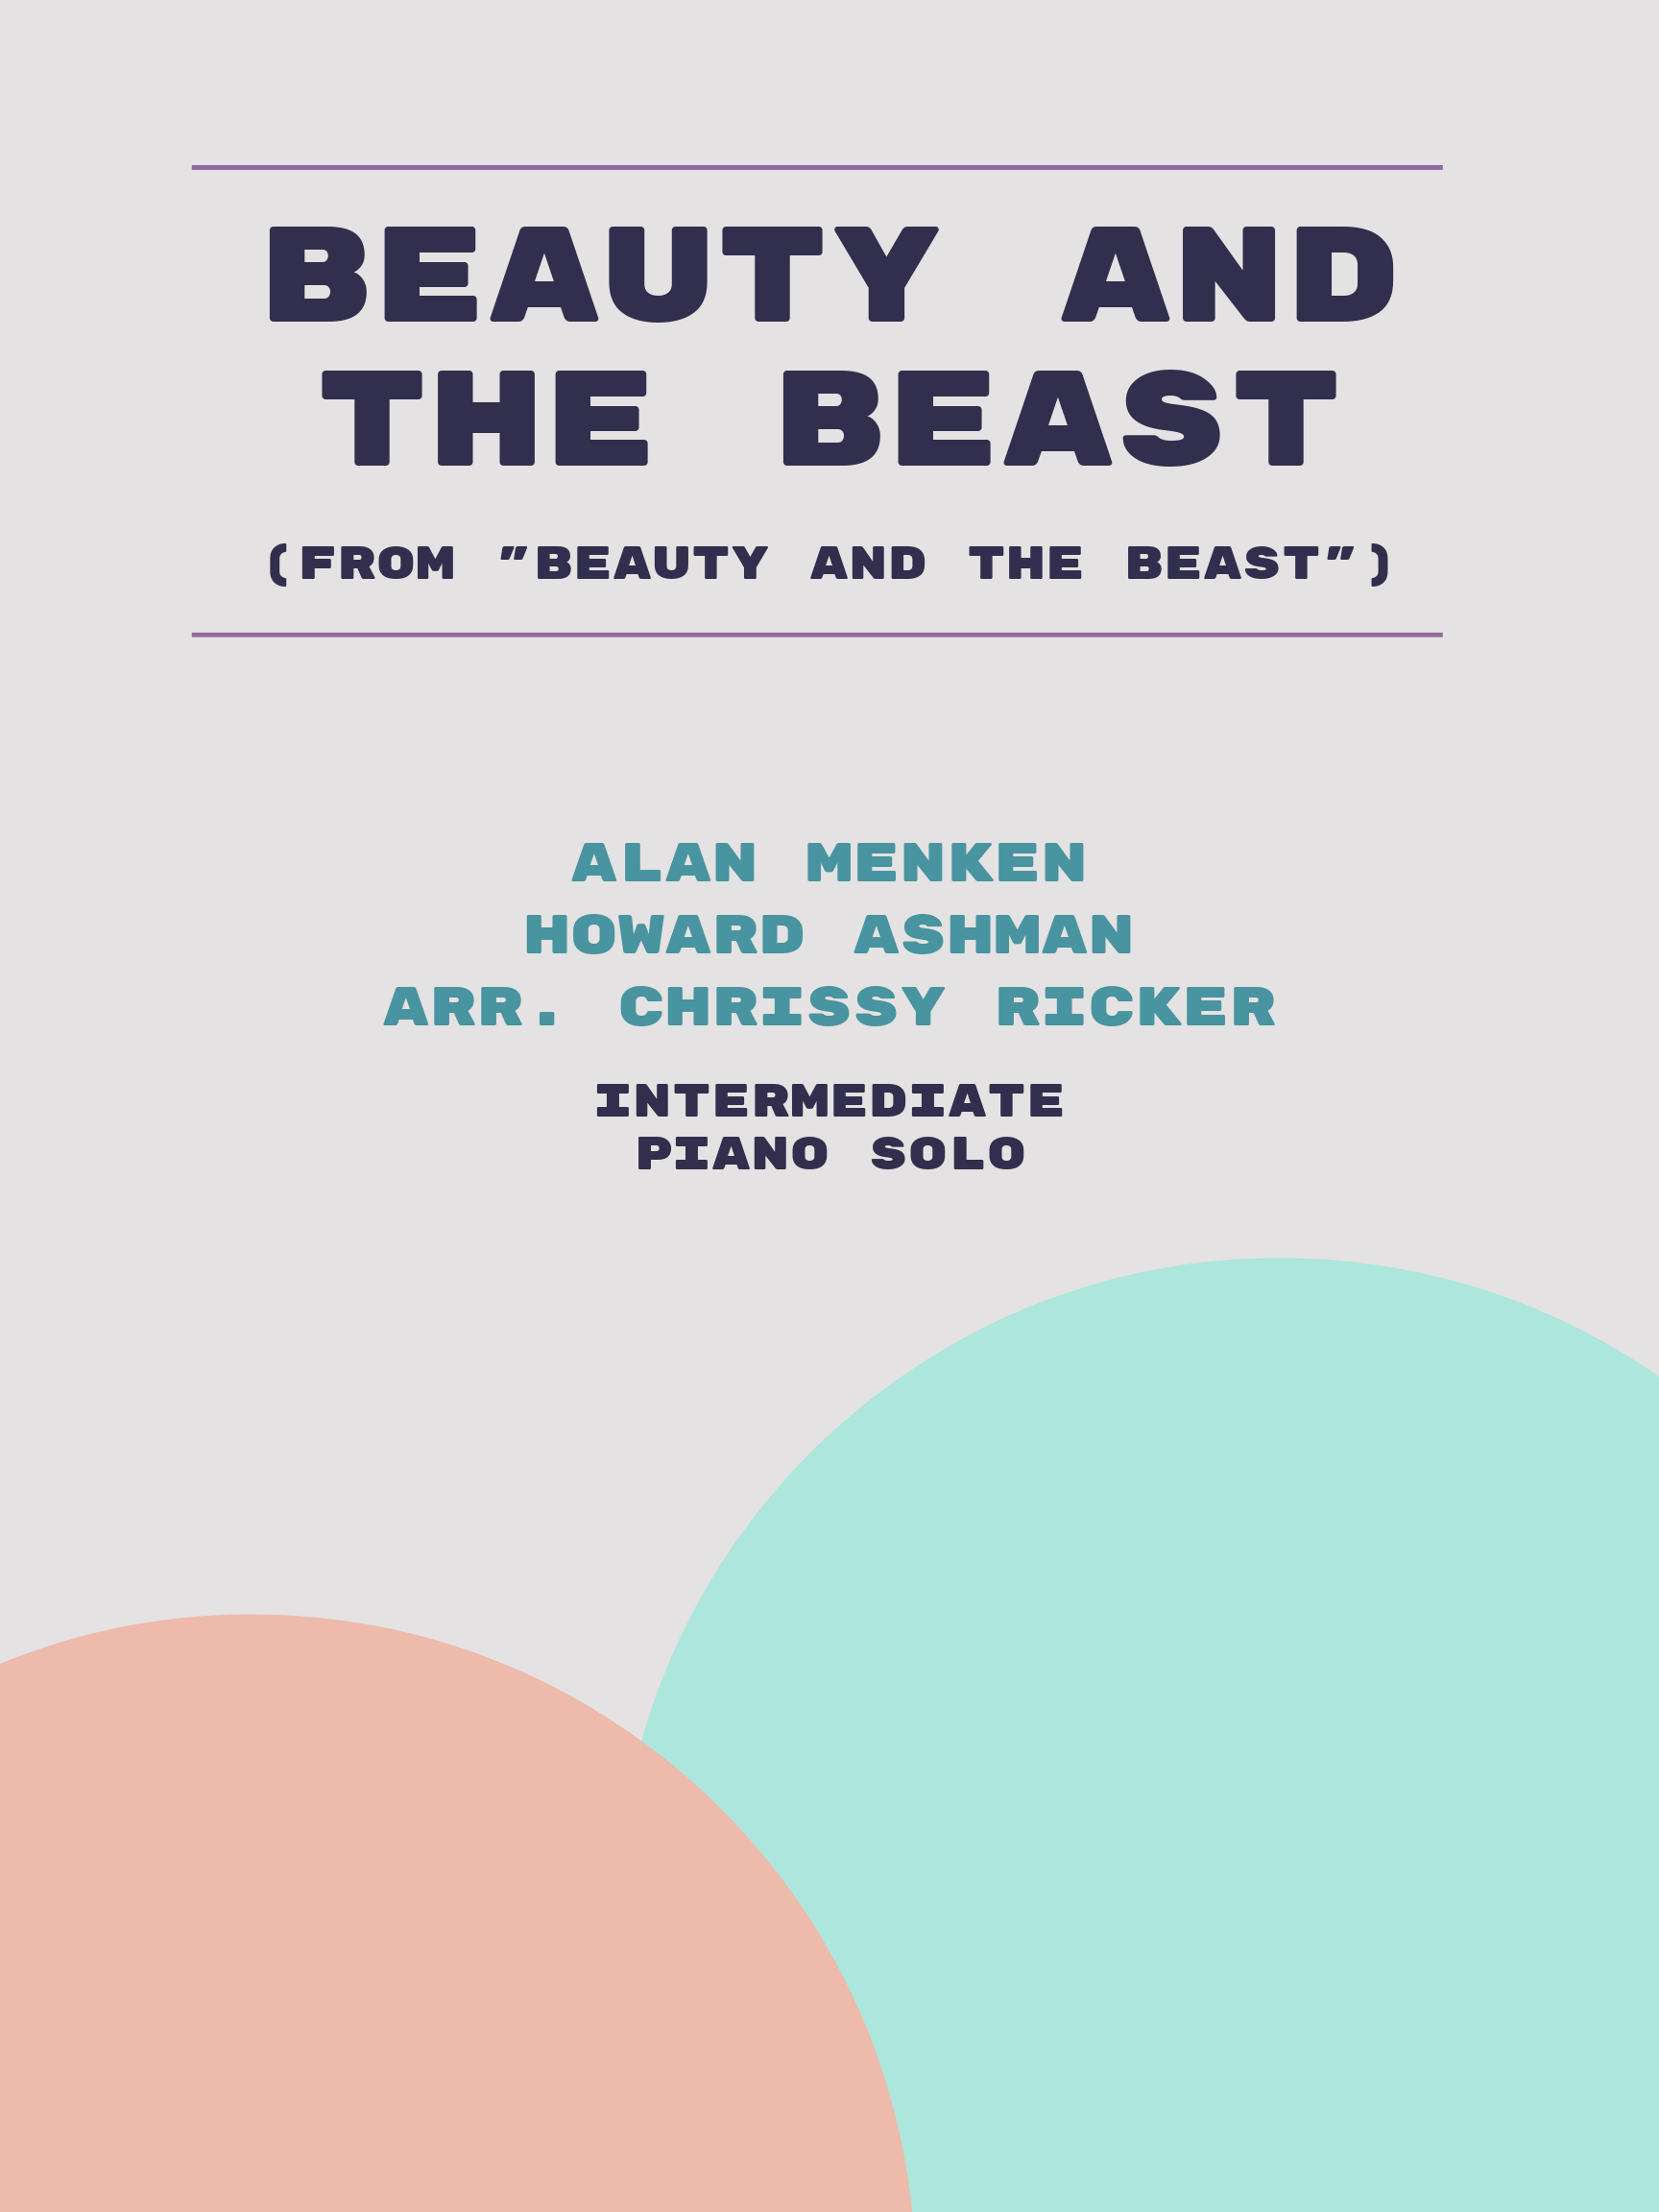 Beauty and the Beast by Alan Menken, Howard Ashman